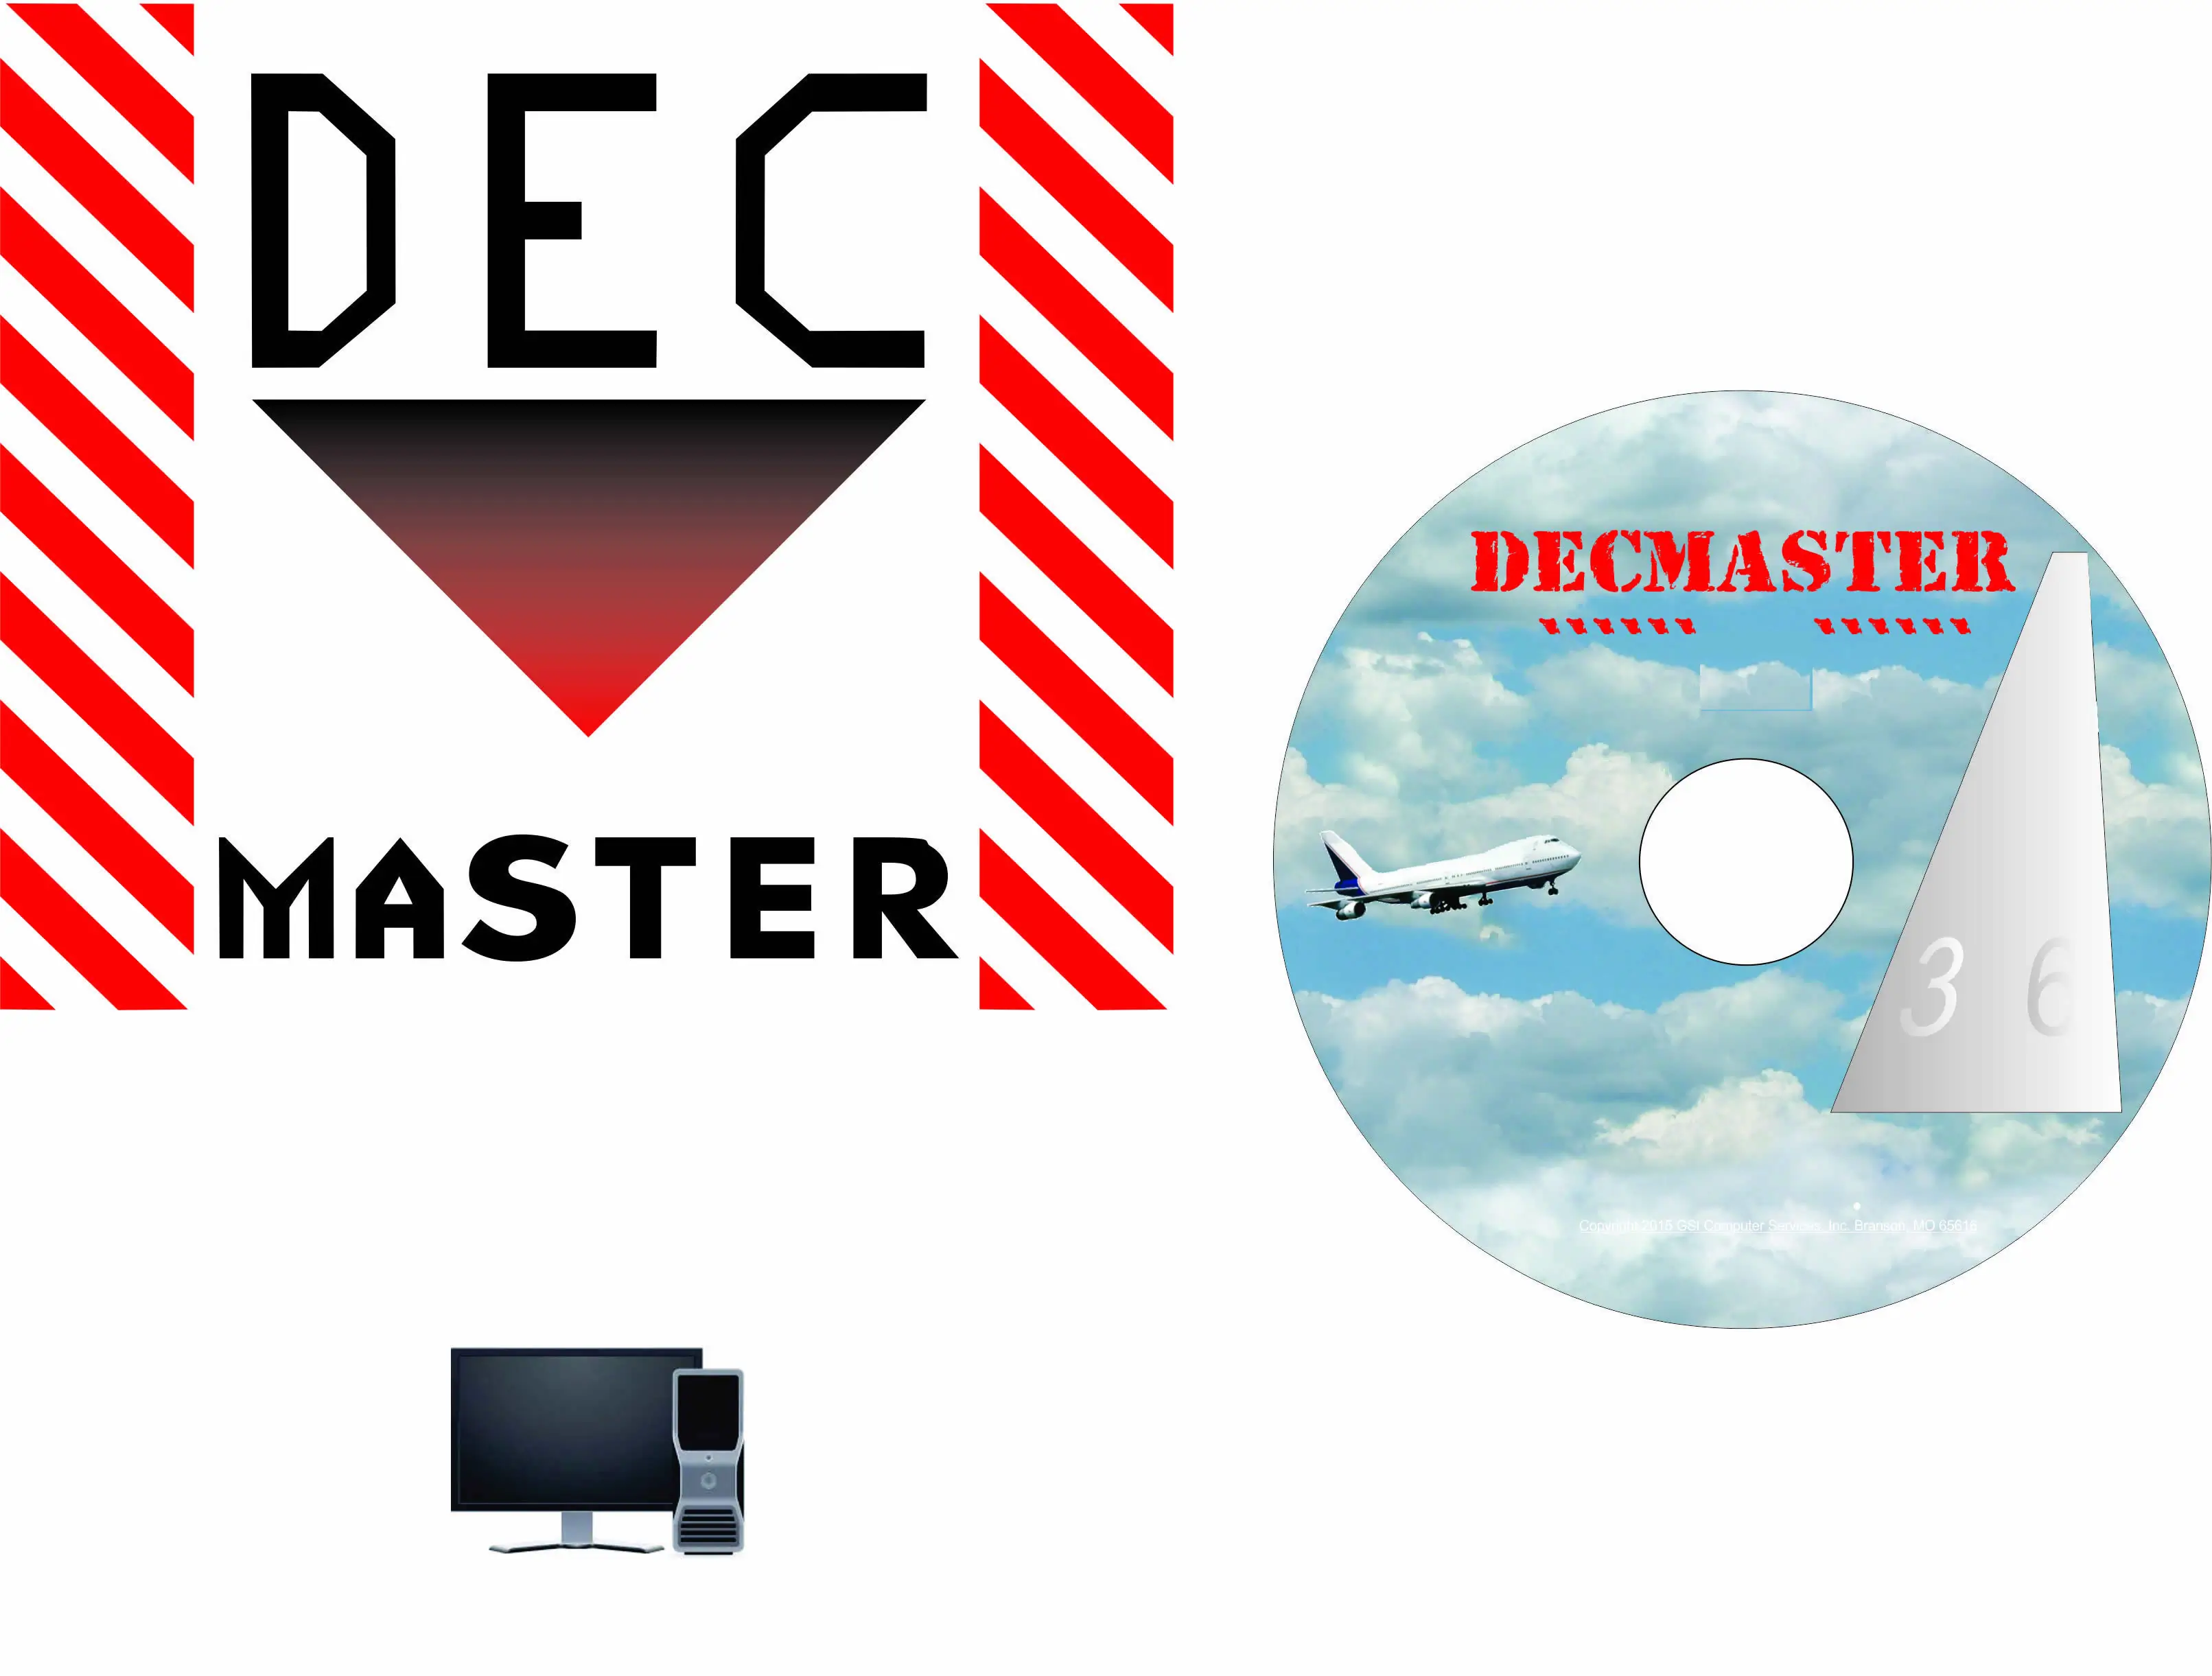 Dec Master Shipper's Declaration of Dangerous Goods (DGD) software